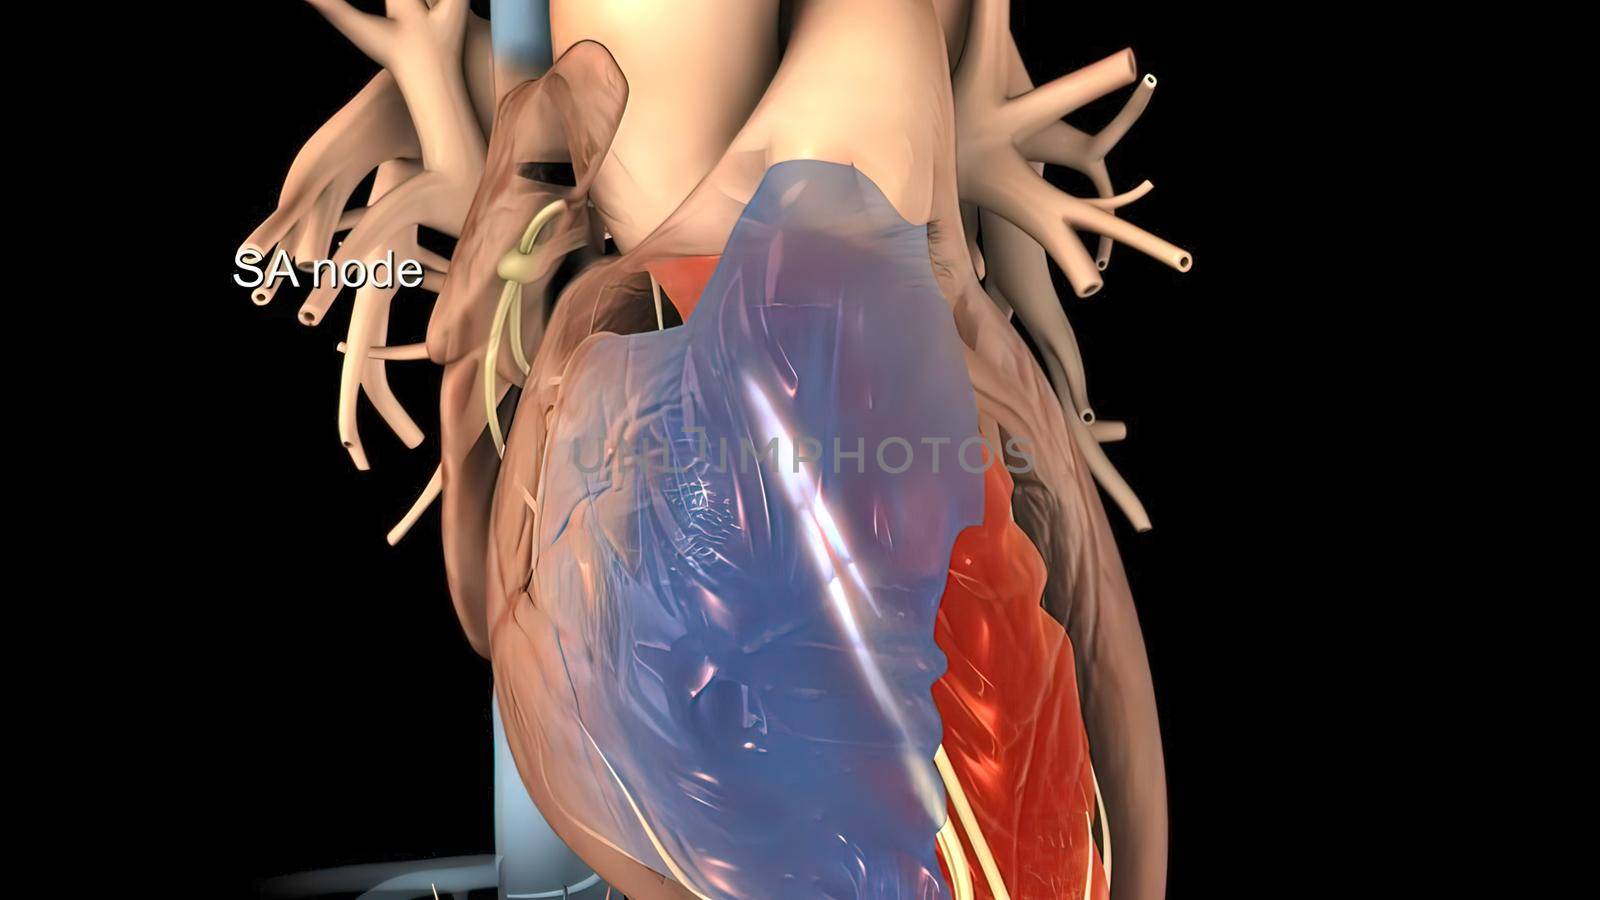 Heart Anatomy AV atrioventricular node For Medical Concept 3D Illustration by creativepic